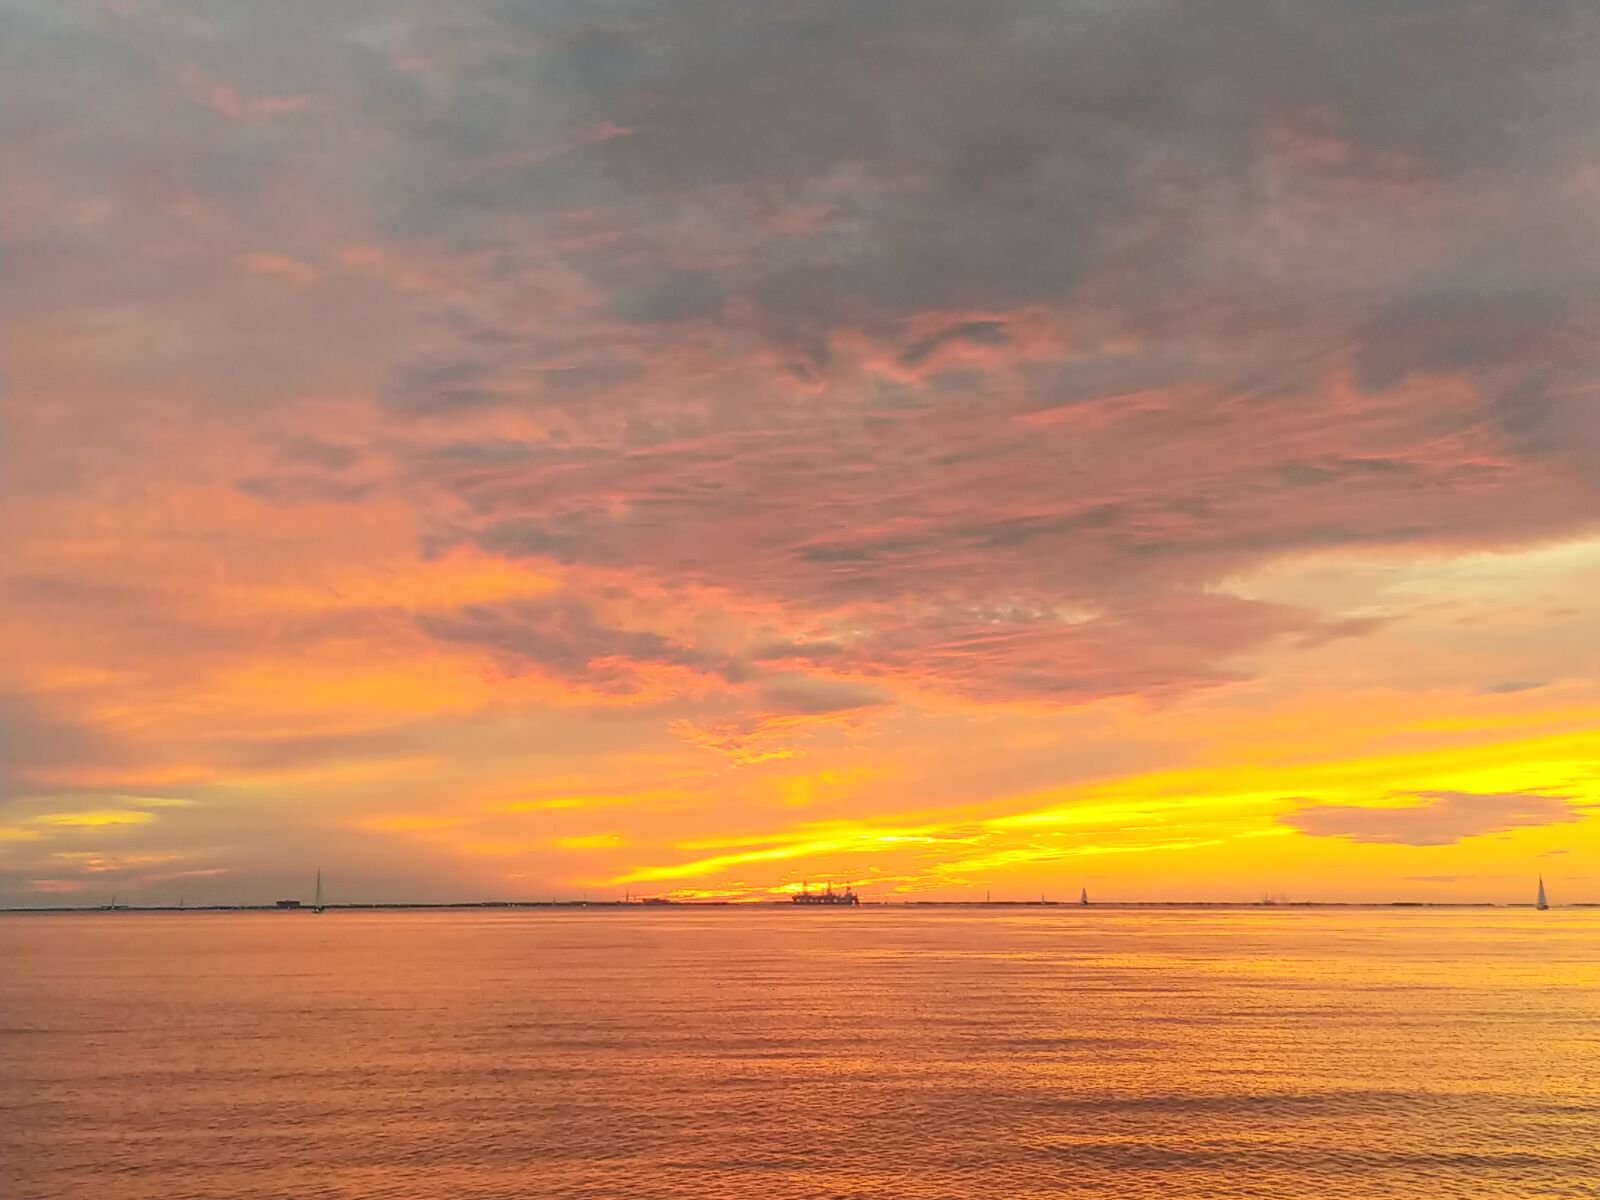 LG V30 sample photo. Ocean, sunset, sky photography